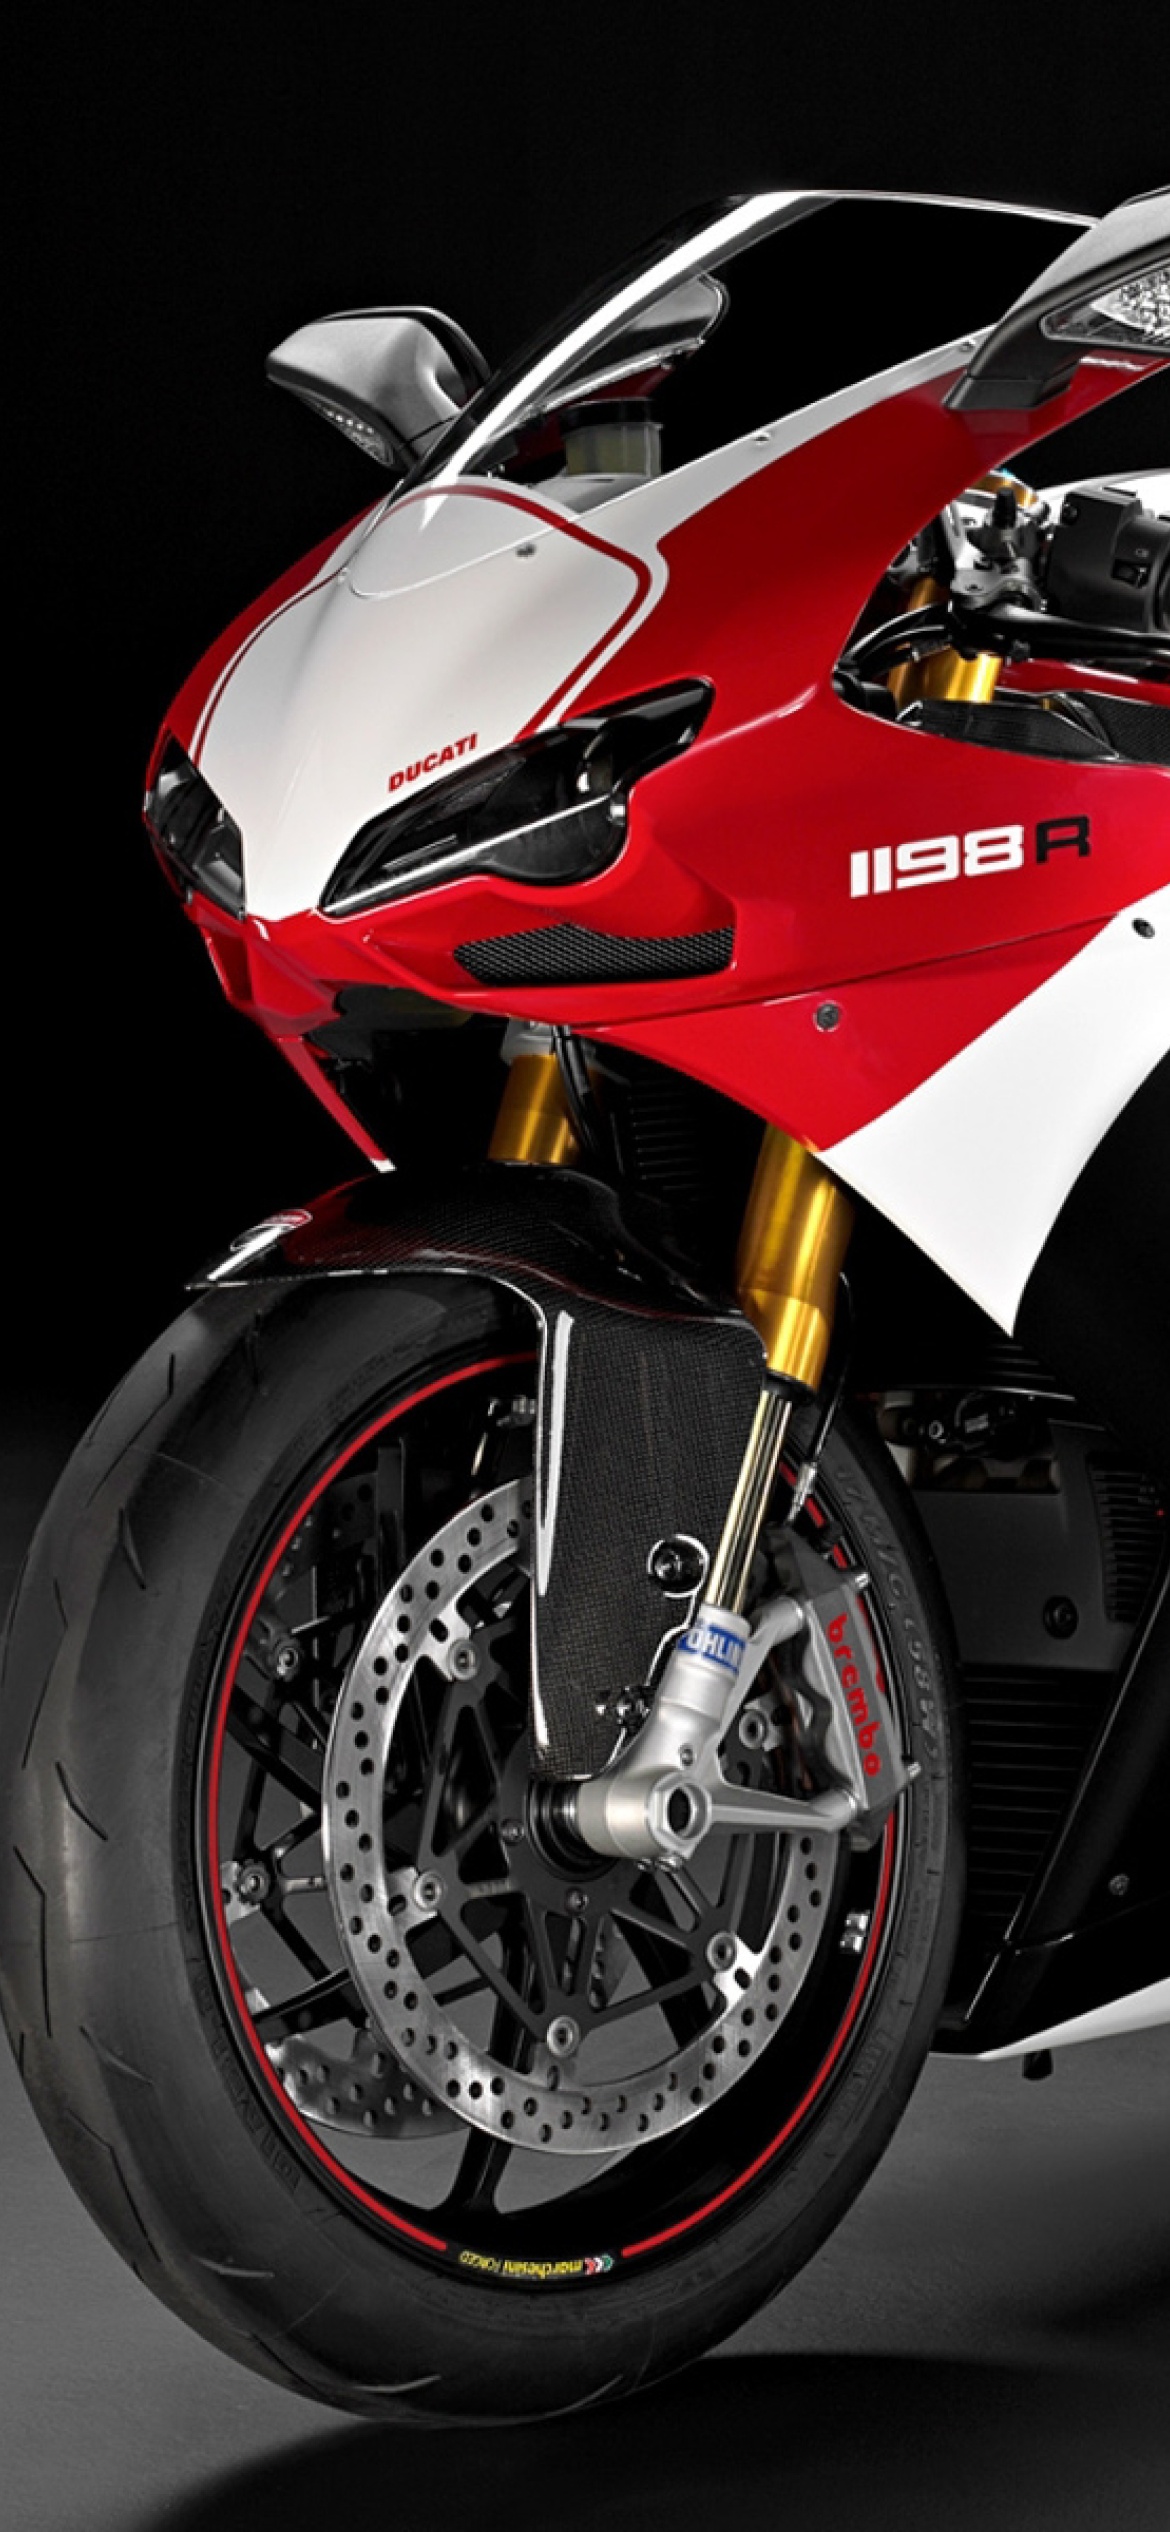 Fondo de pantalla Superbike Ducati 1198 R 1170x2532